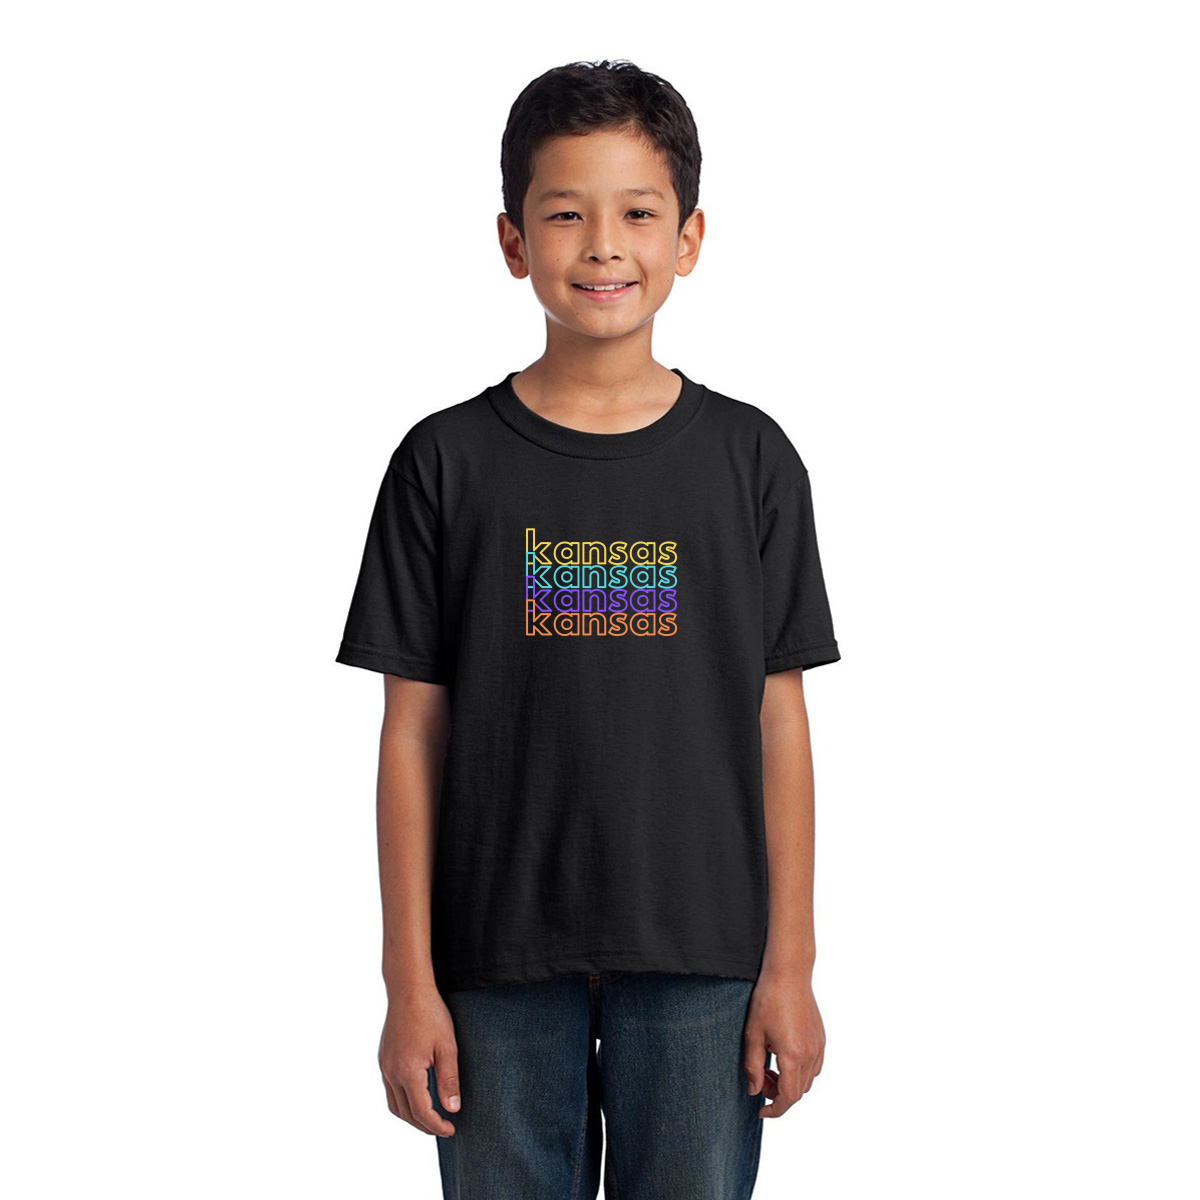 Kansas Kids T-shirt | Black